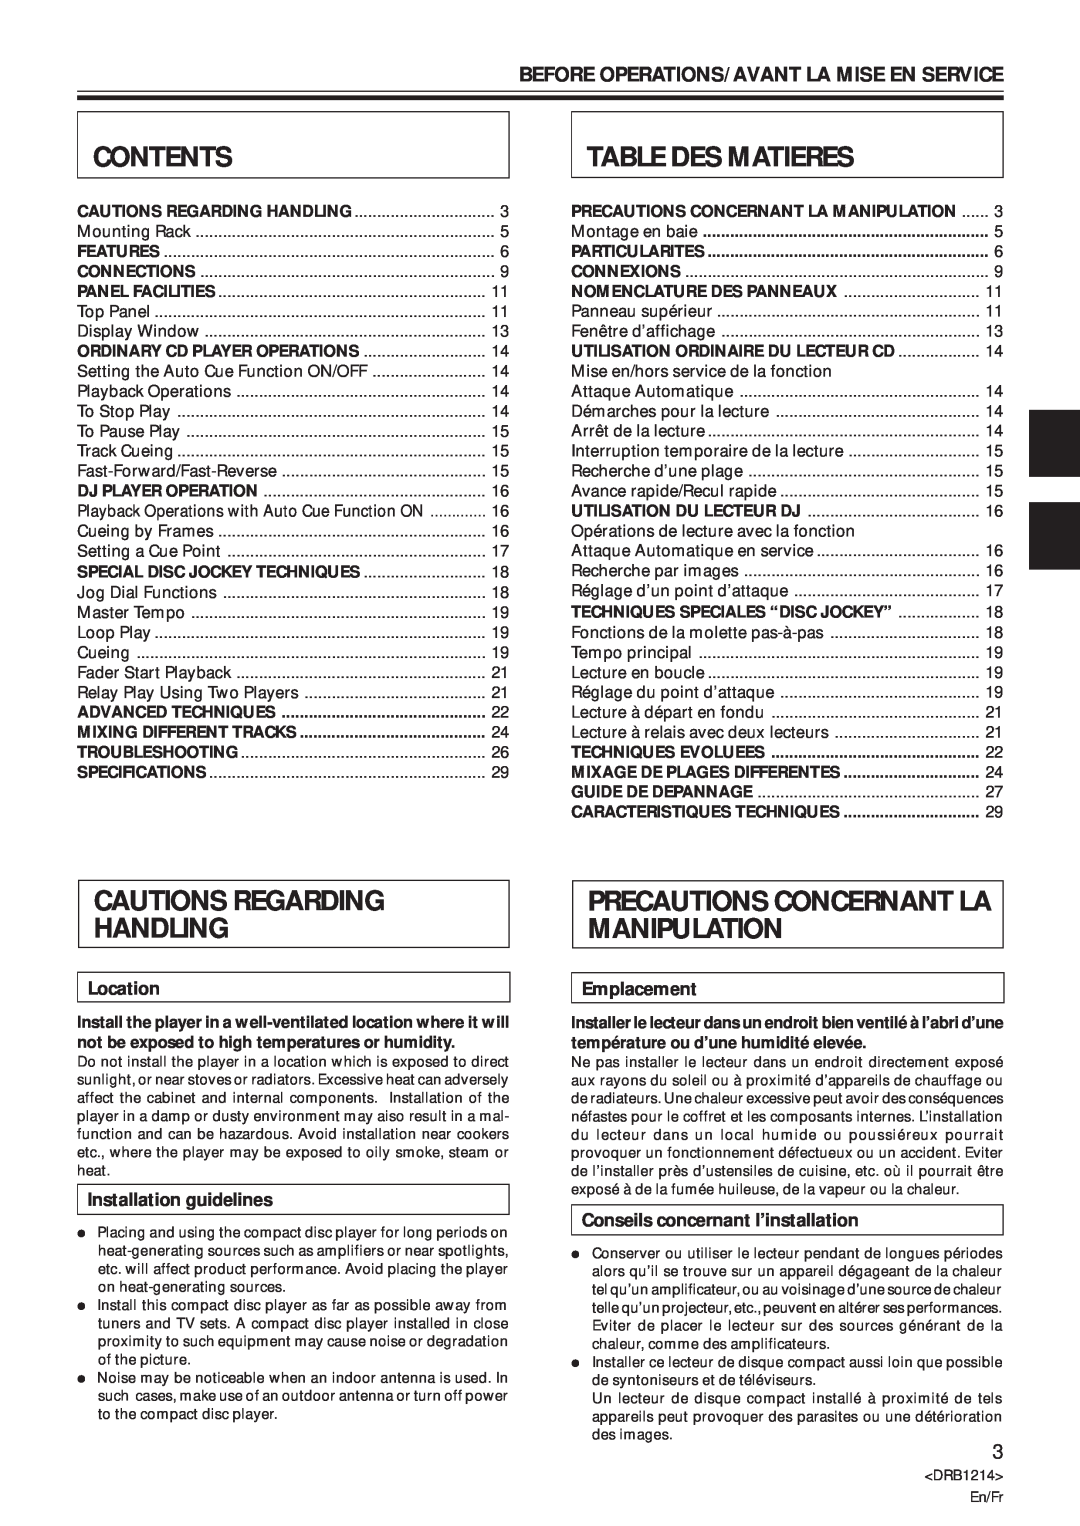 Pioneer CDJ-500S Contents, Table Des Matieres, Cautions Regarding Handling, Precautions Concernant La Manipulation 